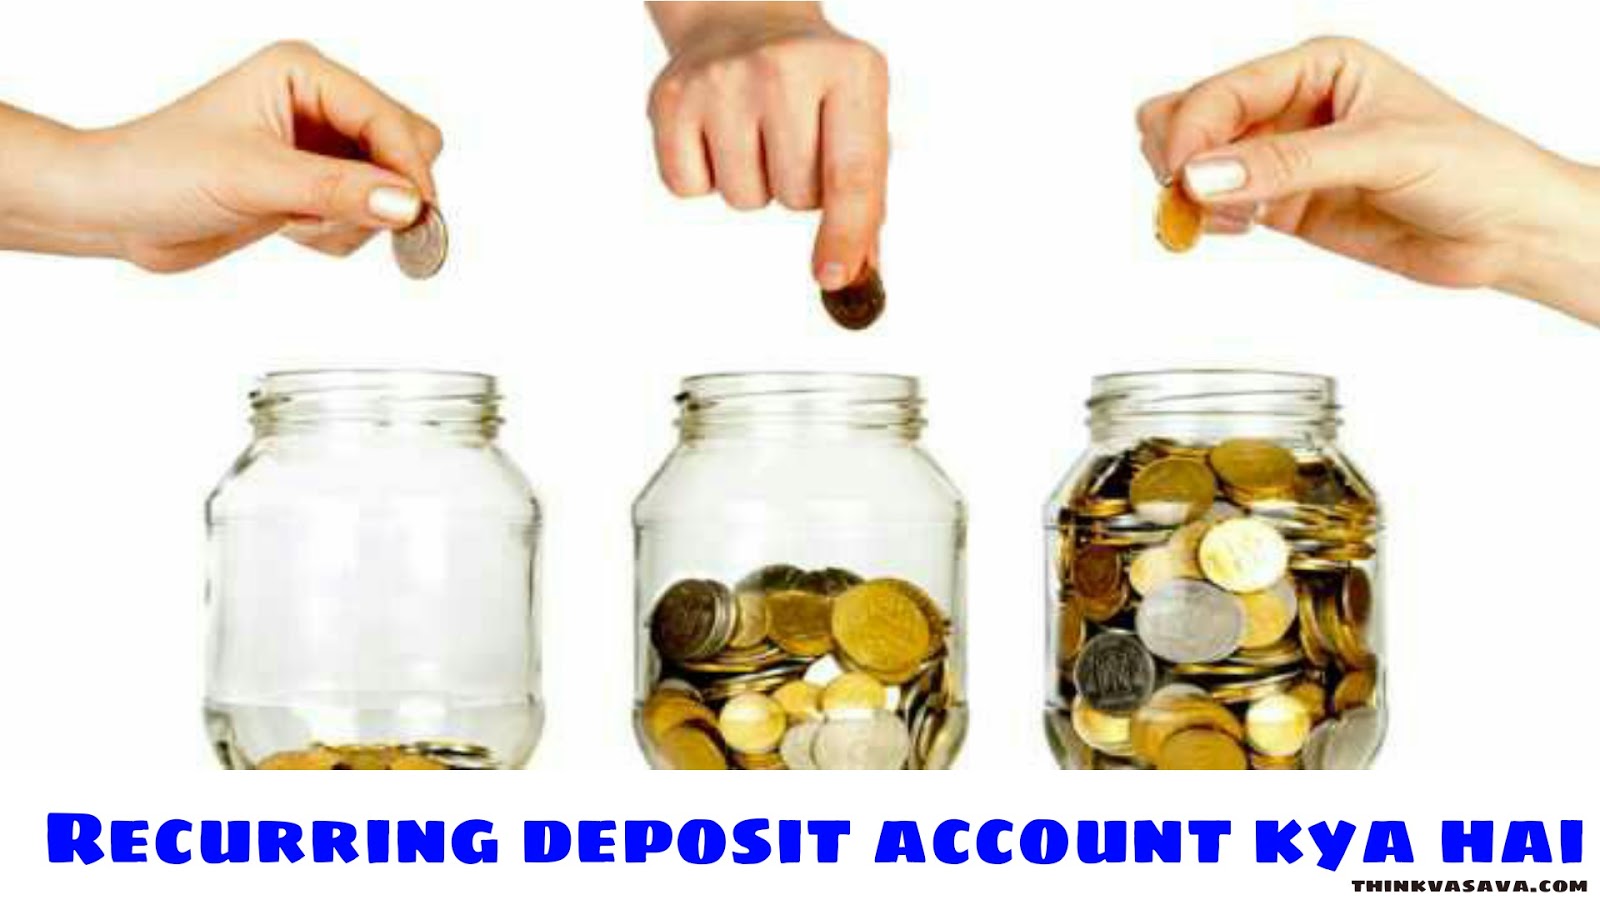 RD â€“ Recurring deposit account kya hai or benefits | Think Vasava